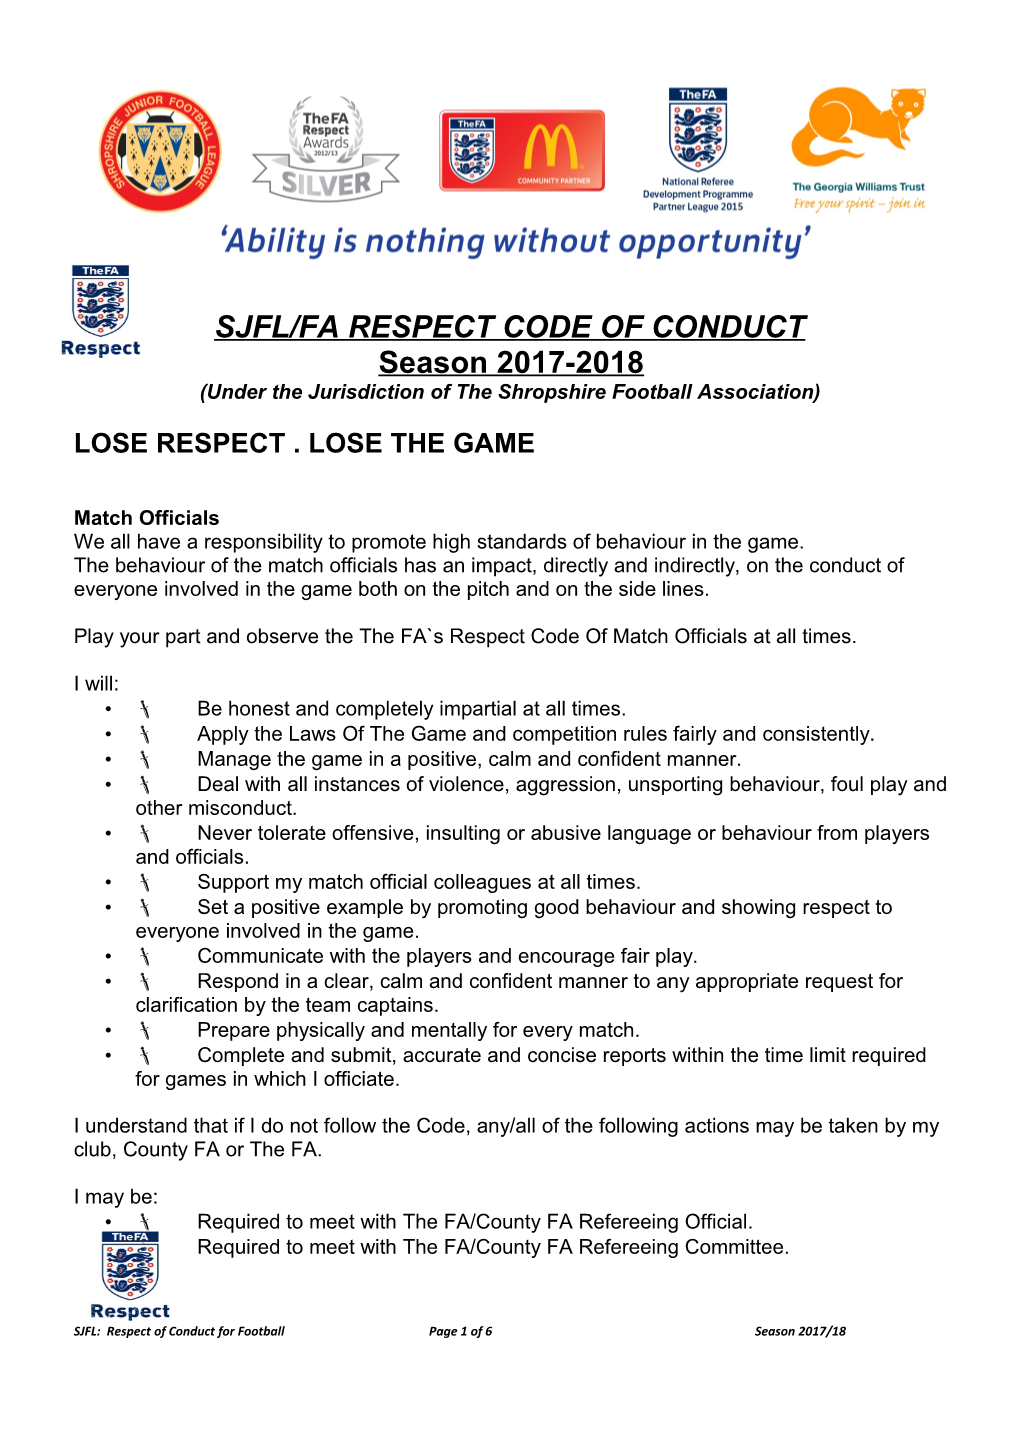 Under the Jurisdiction of the Shropshire Football Association